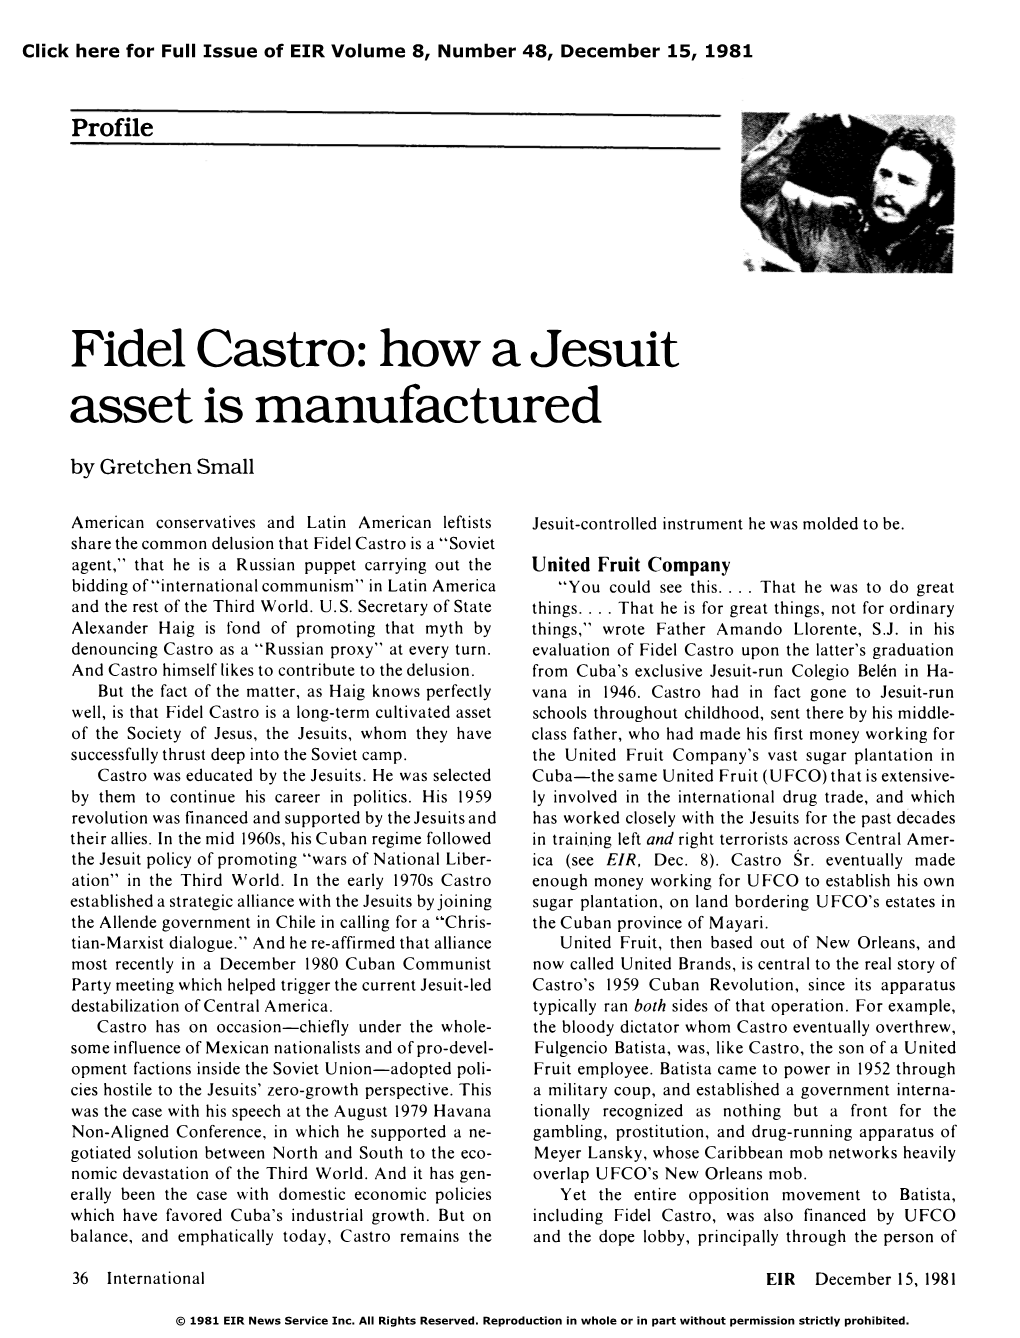 Fidel Castro: How a Jesuit Asset Is Manufactured